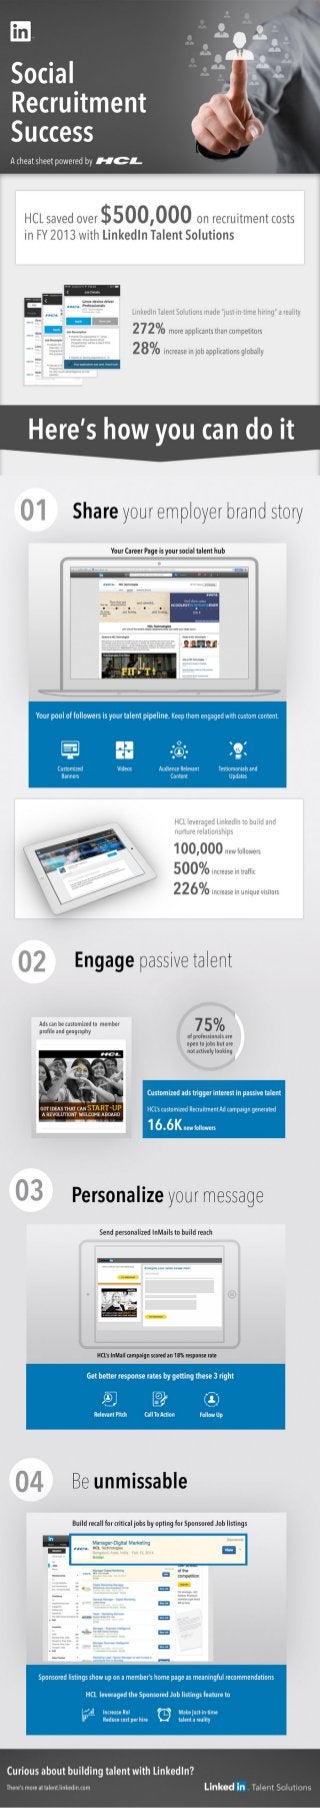 LinkedIn Social Recruitment Cheat Sheet Powered by HCL | Infographic